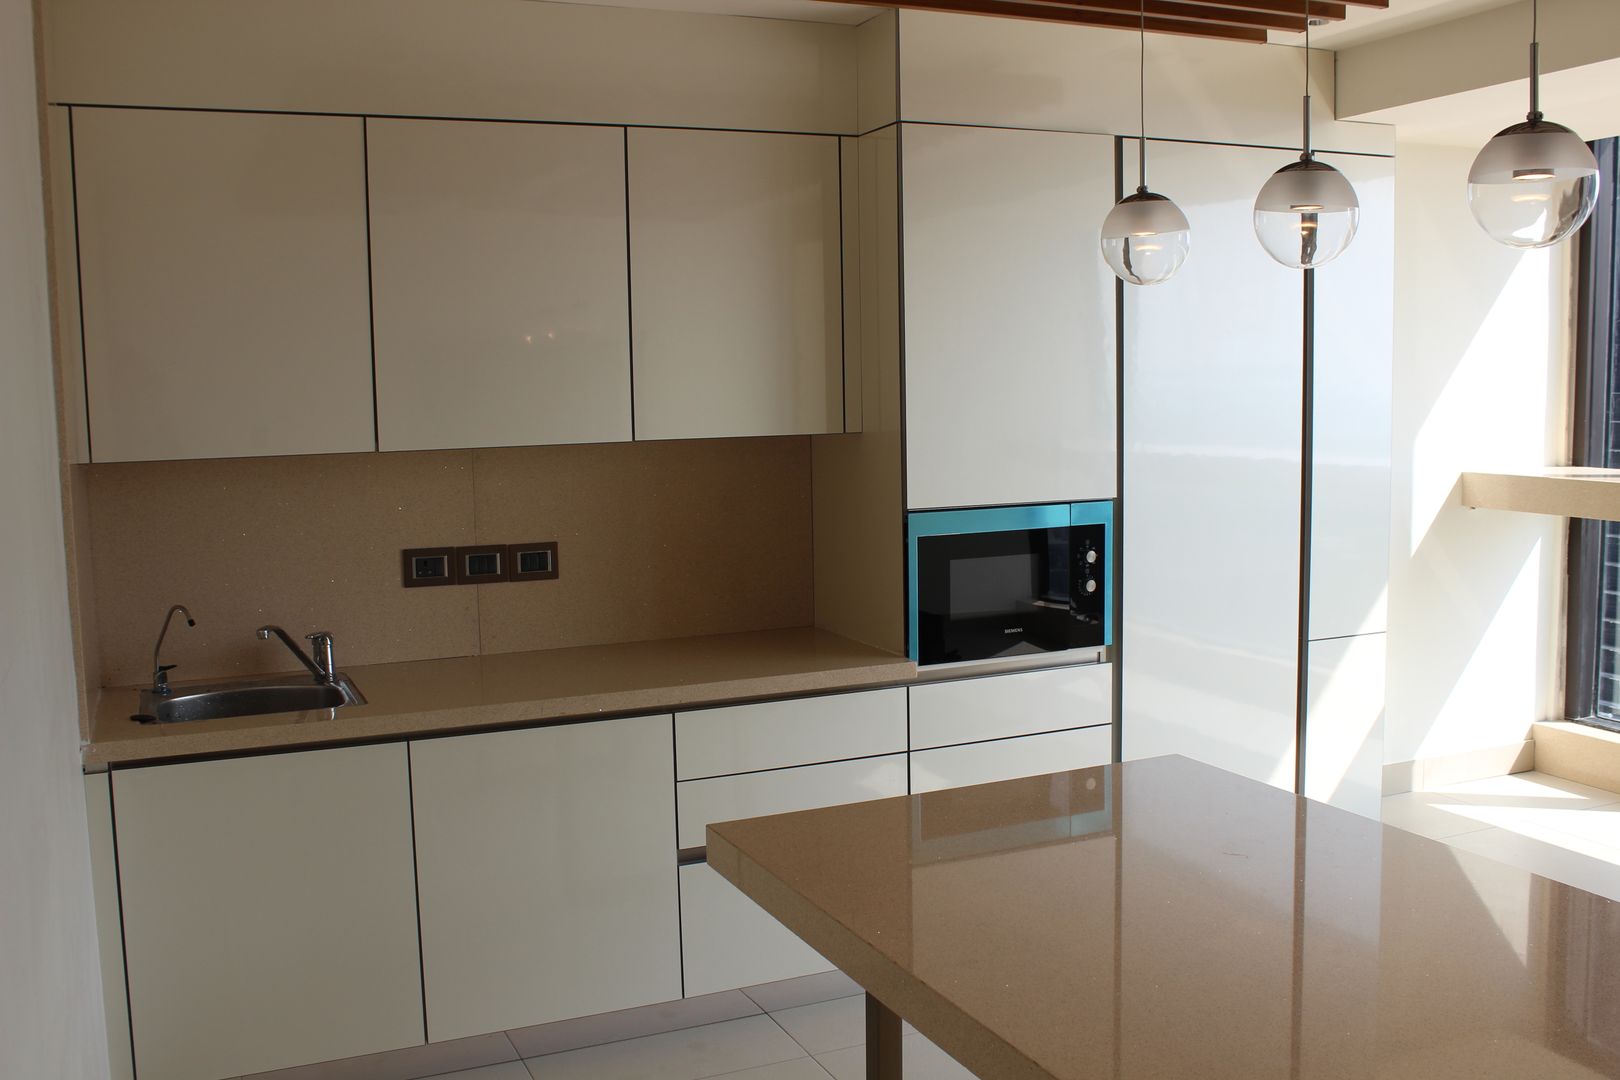 Modular kitchen installed by zenia homify Built-in kitchens Plywood